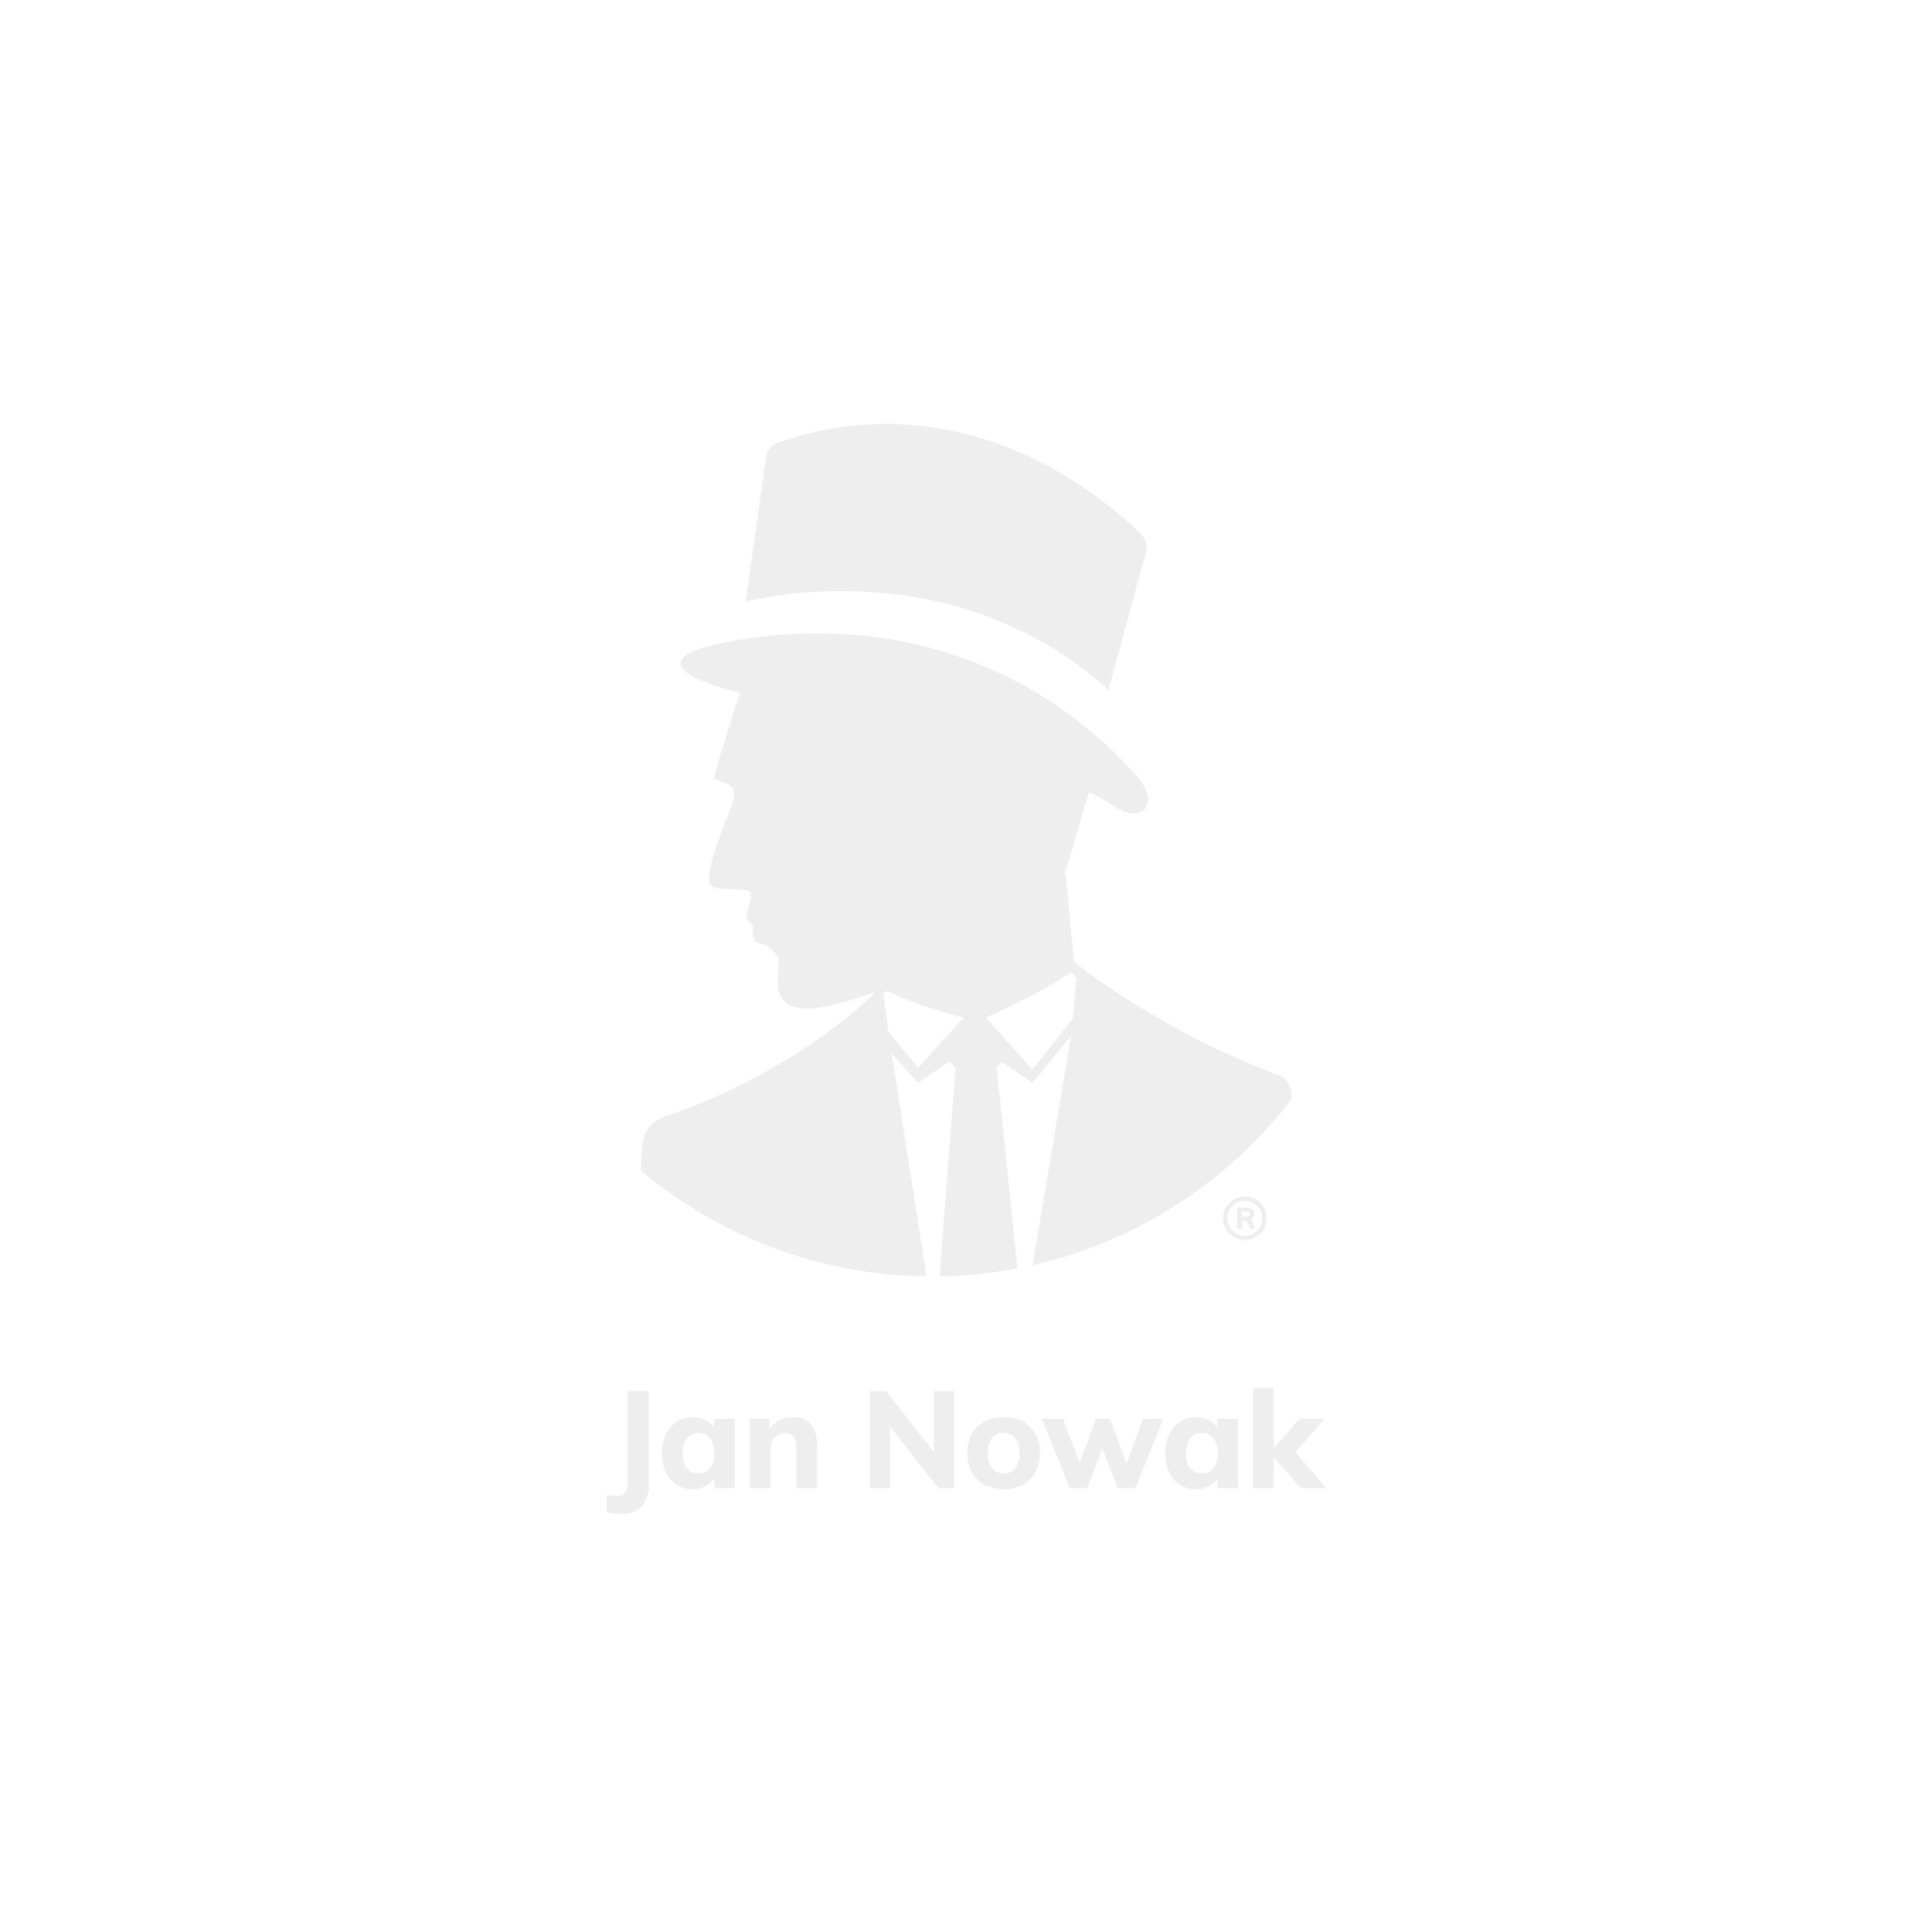 JAN NOWAK Modell JAN II (C001 II) Aktenschrank Büroschrank 185 cm (115 cm breit): Anthrazit-Weiß